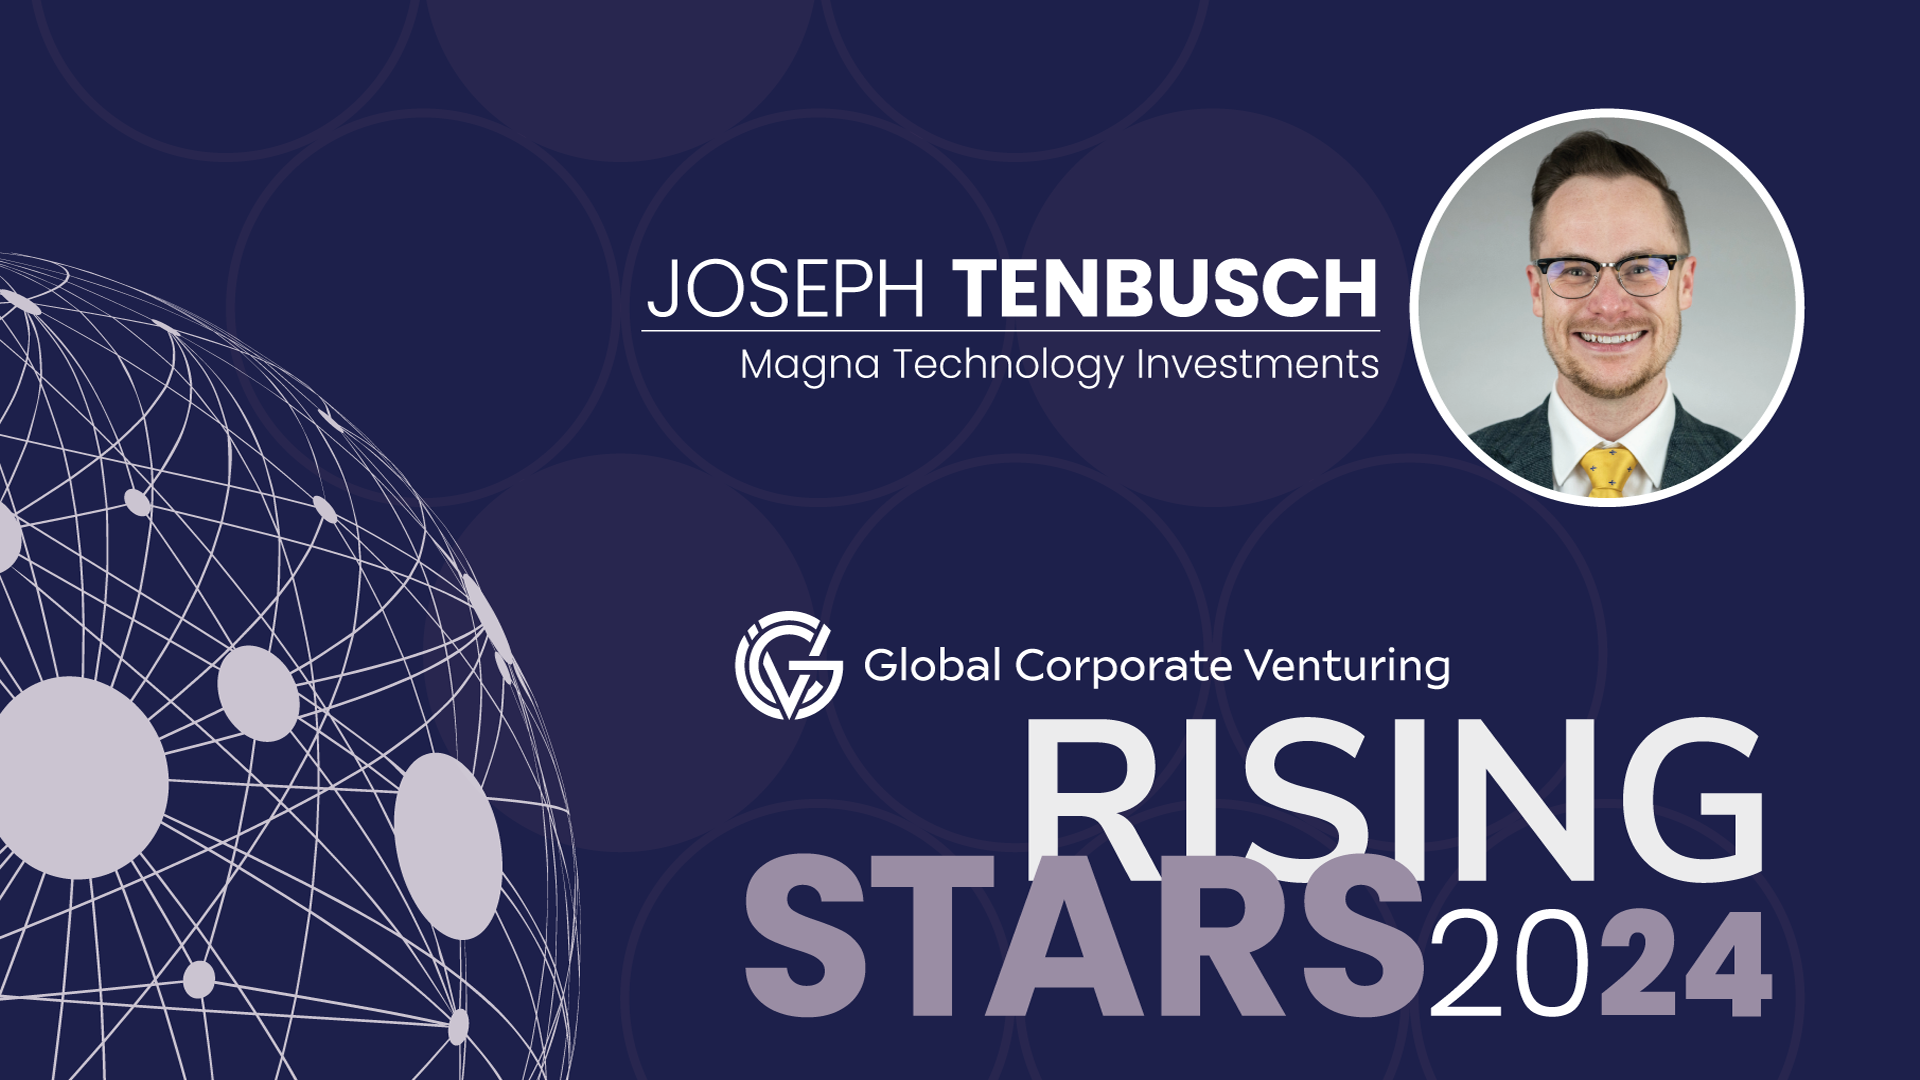 Joseph Tenbusch, Magna Technology Investments